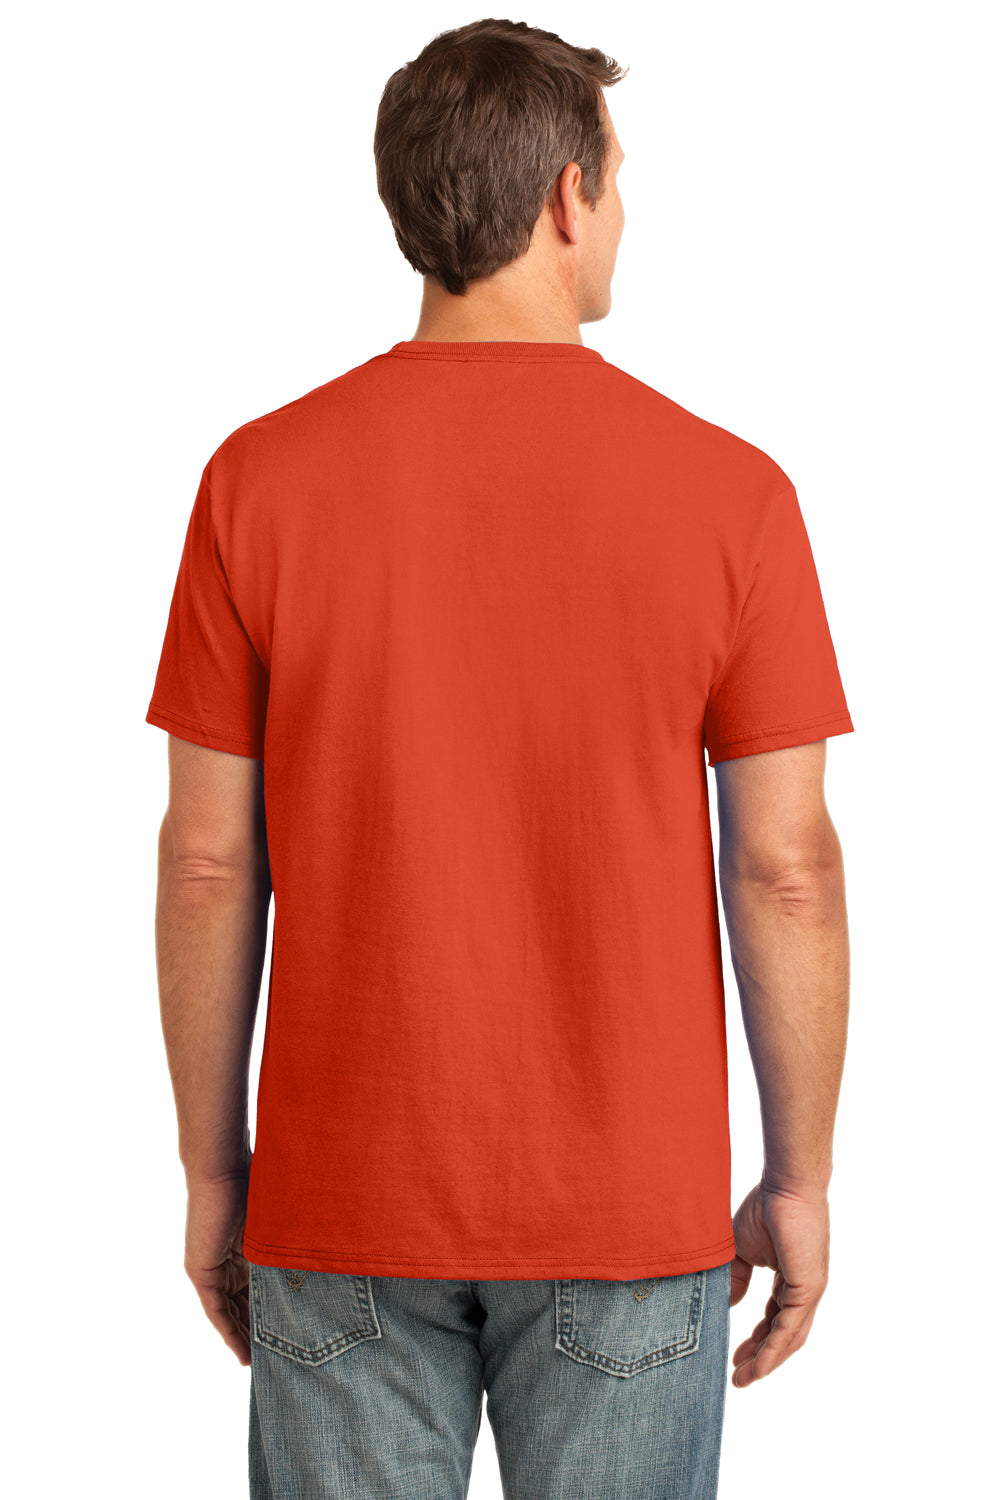 Port & Company PC54P Mens Core Short Sleeve Crewneck T-Shirt w/ Pocket Orange Back